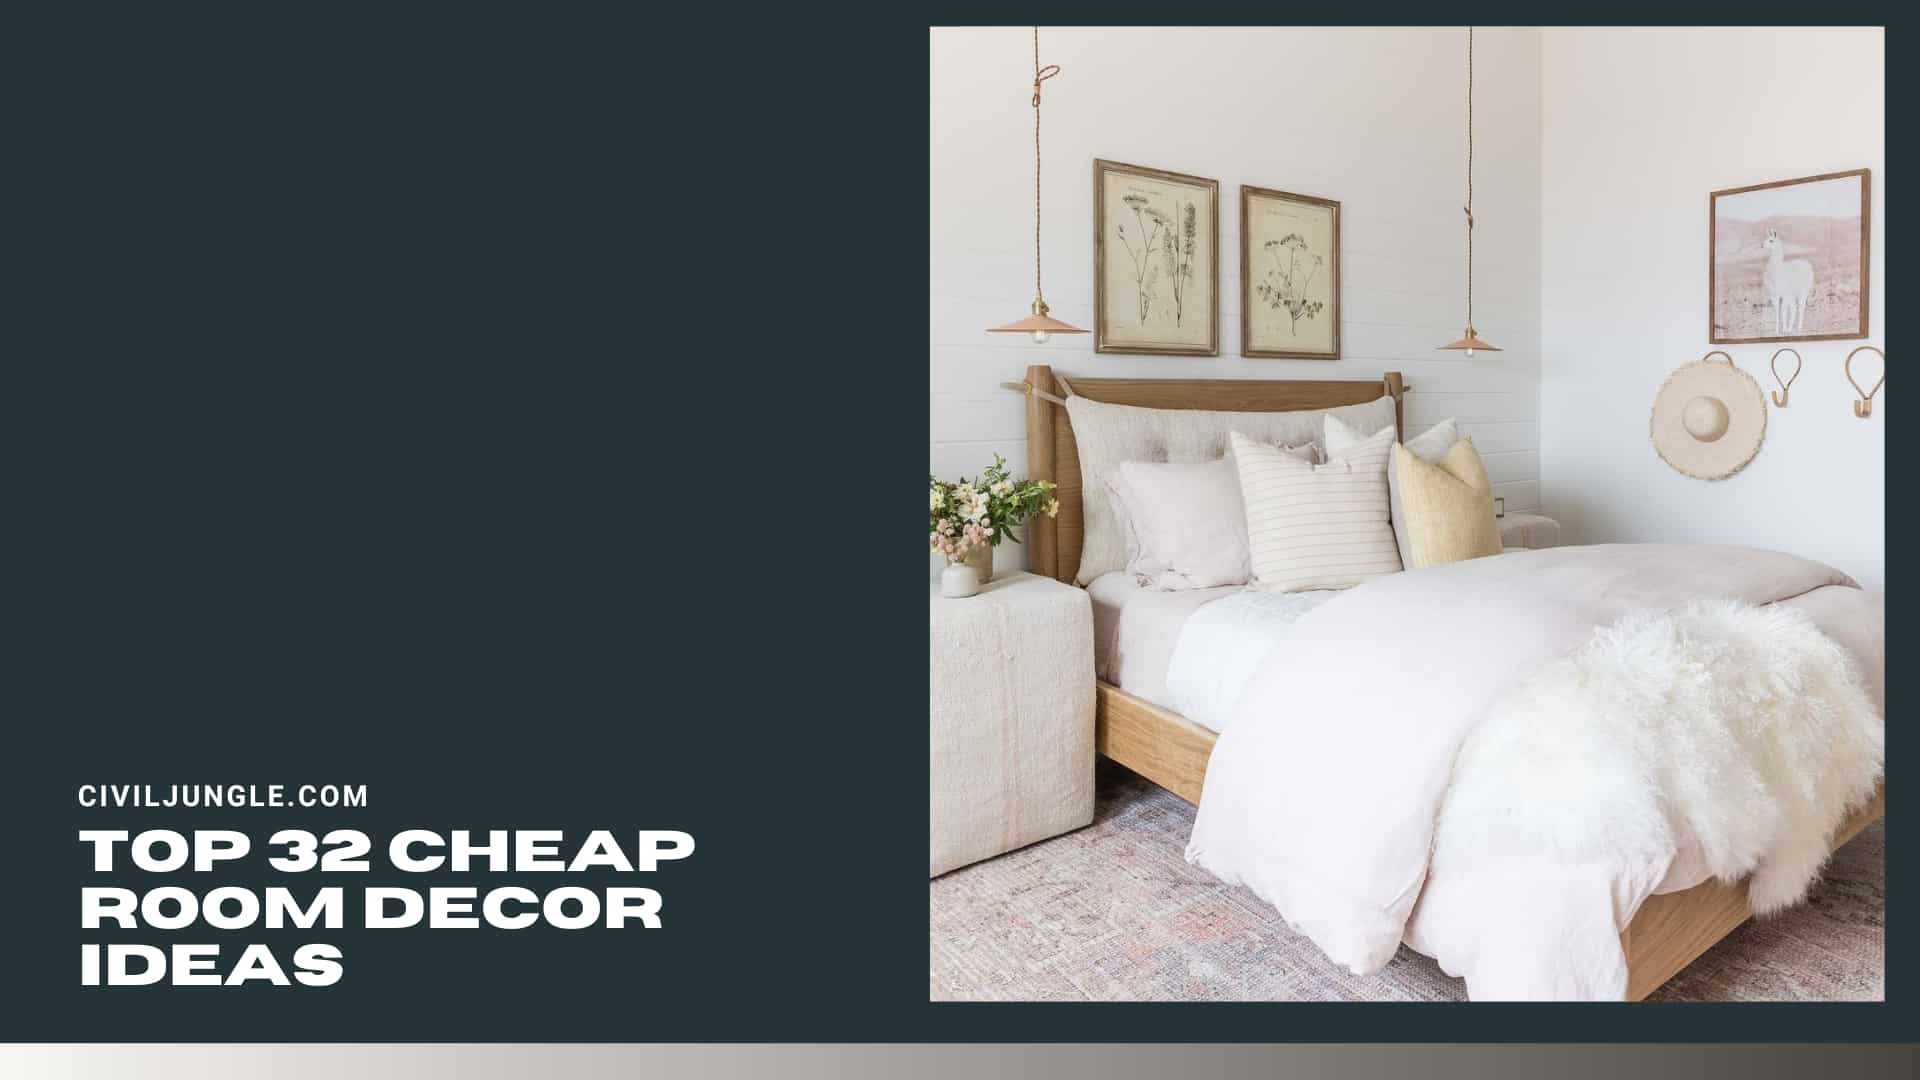 Top 32 Cheap Room Decor Ideas